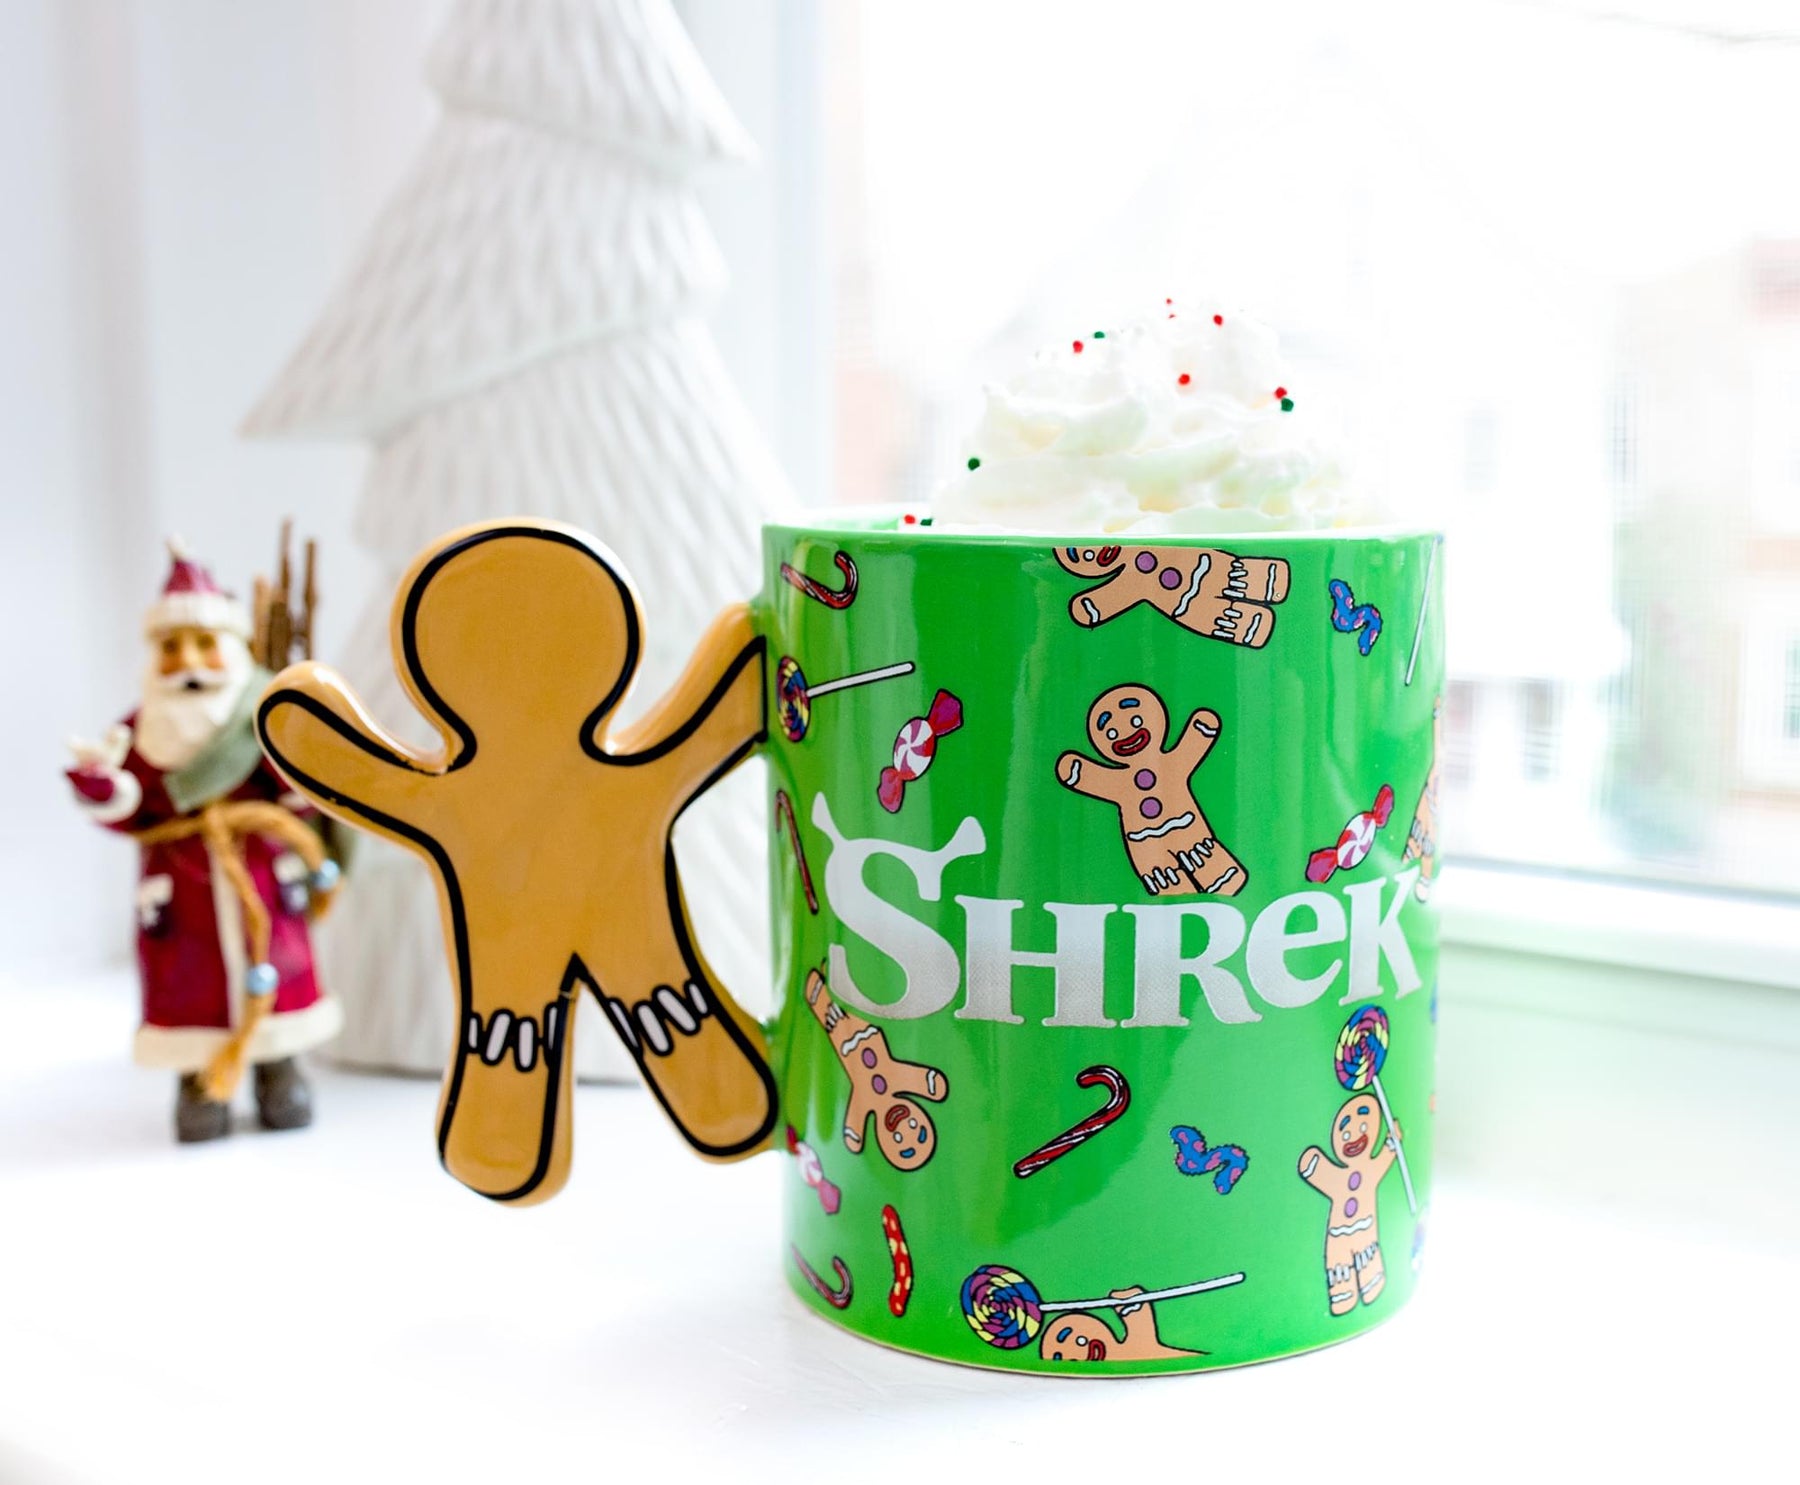 Shrek Gingerbread Man "Avast Ye Cookie" Ceramic Mug With Sculpted Handle